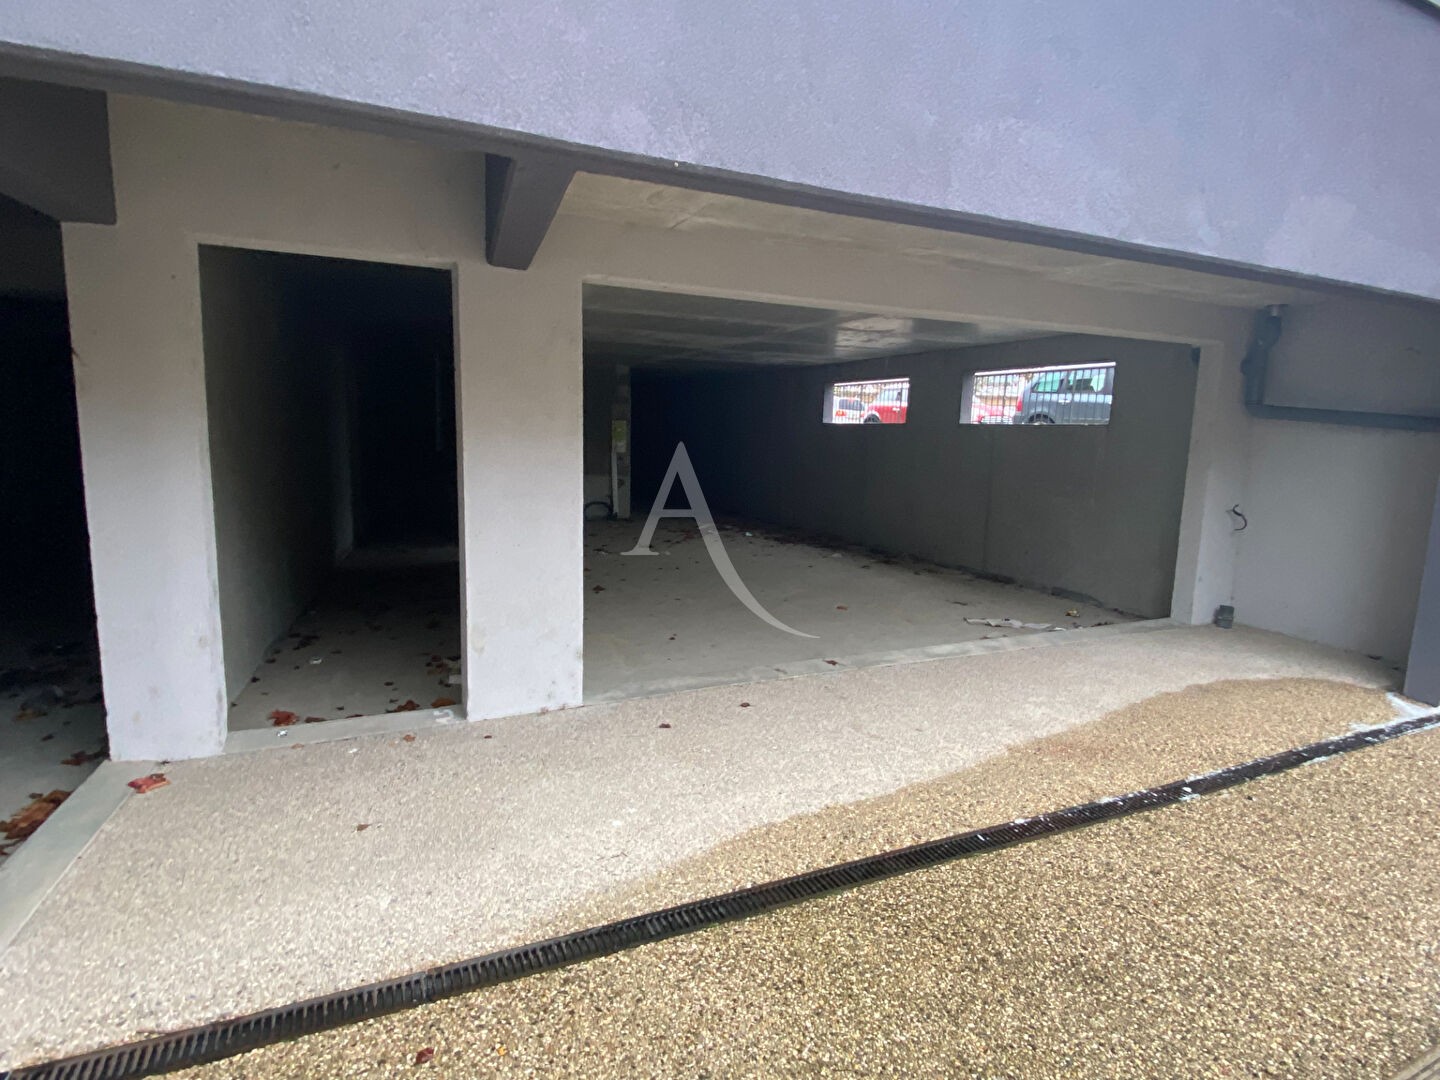 Location Garage / Parking à Bourg-en-Bresse 0 pièce